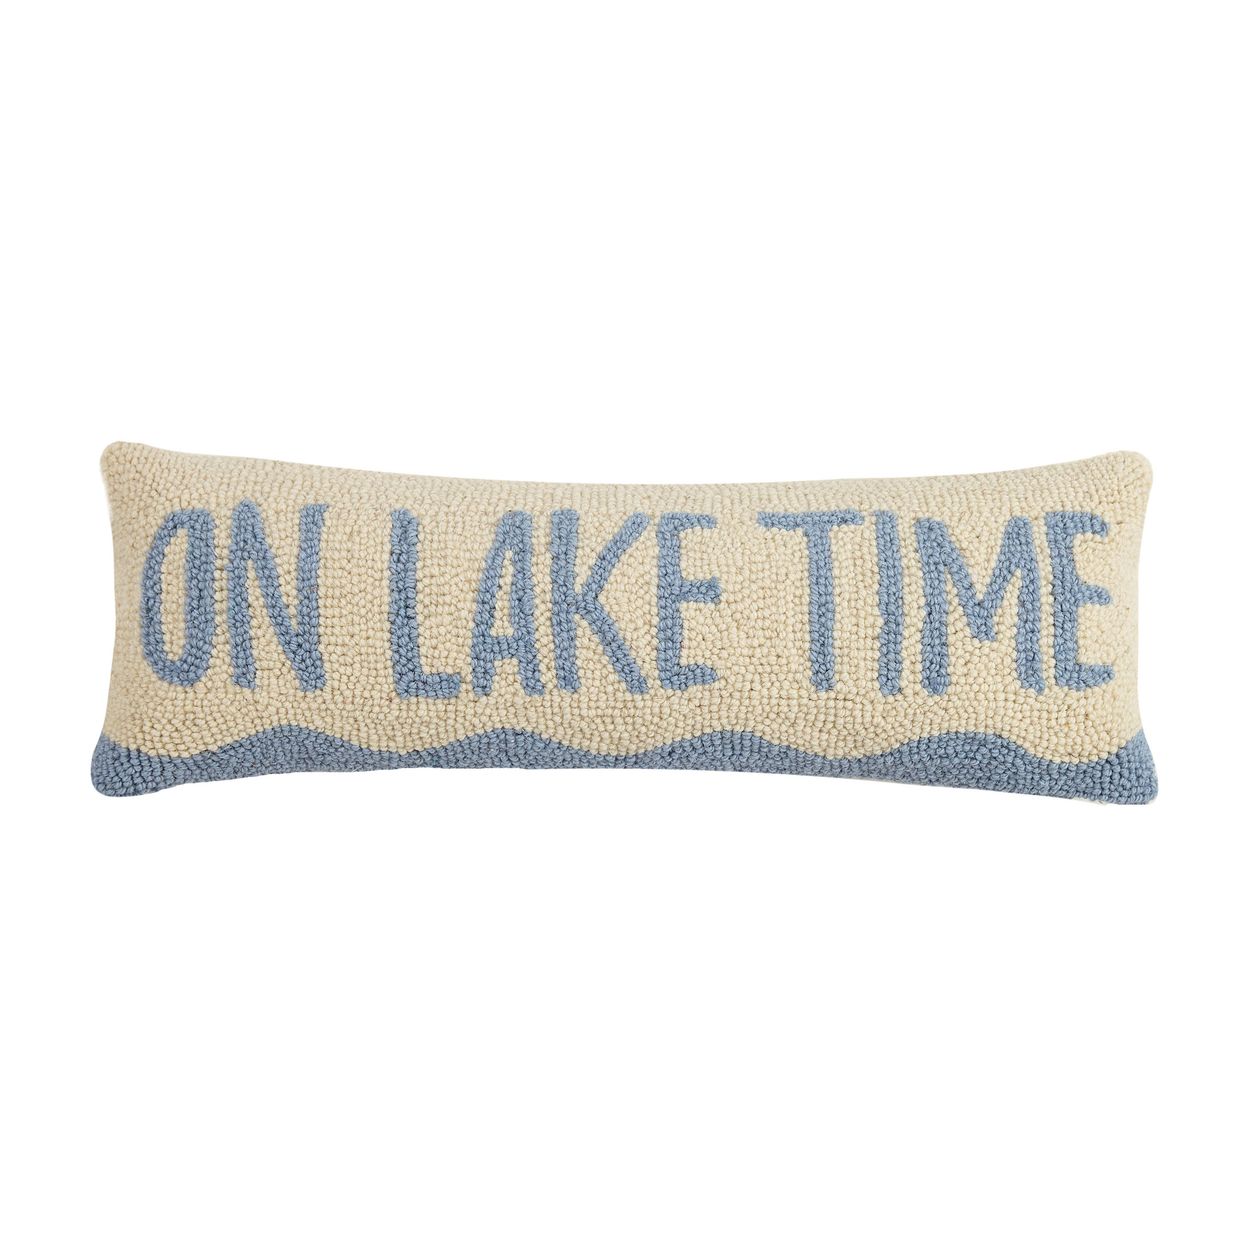 On Lake Time Hook Pillow